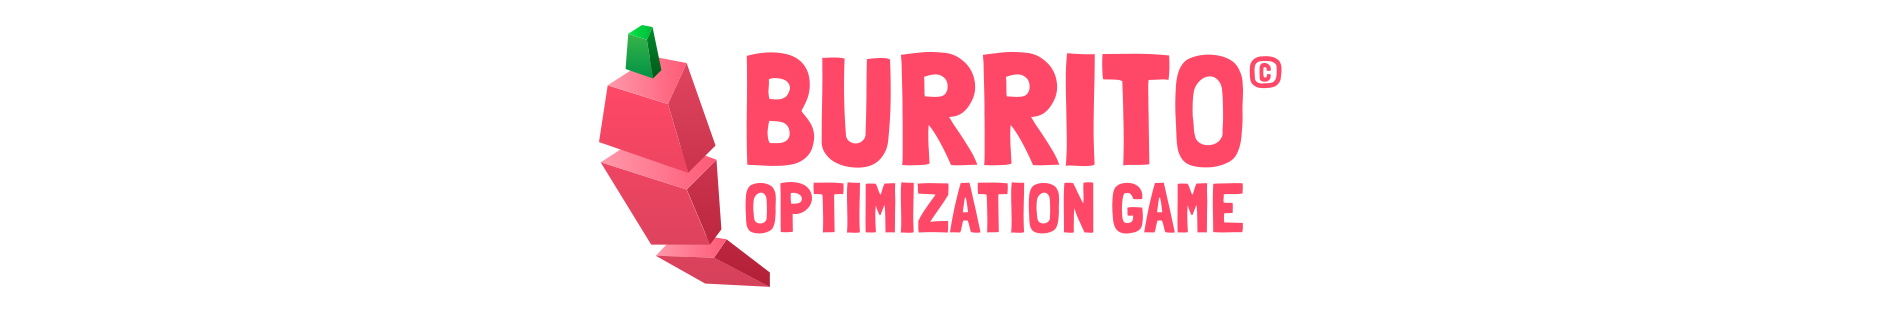 Burrito Optimization Game